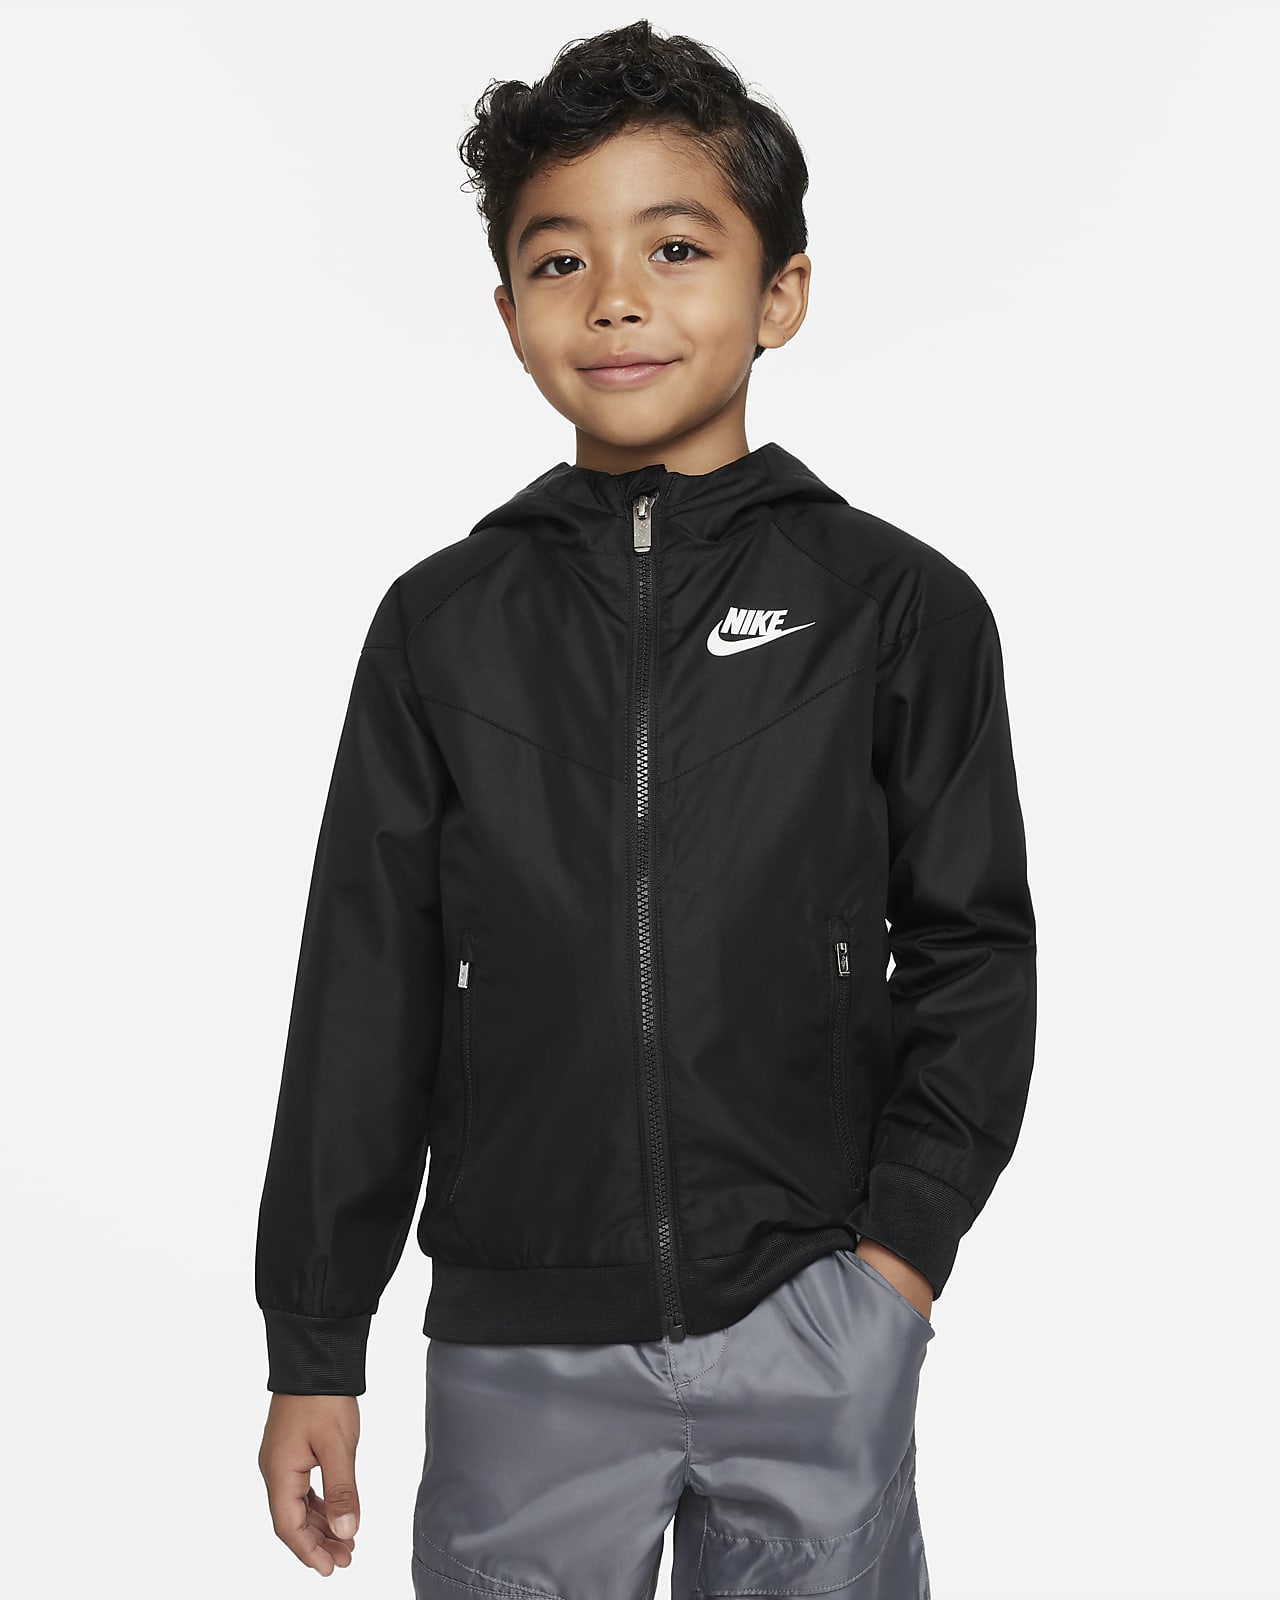 Giacca con zip a tutta lunghezza Nike Sportswear Windrunner – Bambino/a